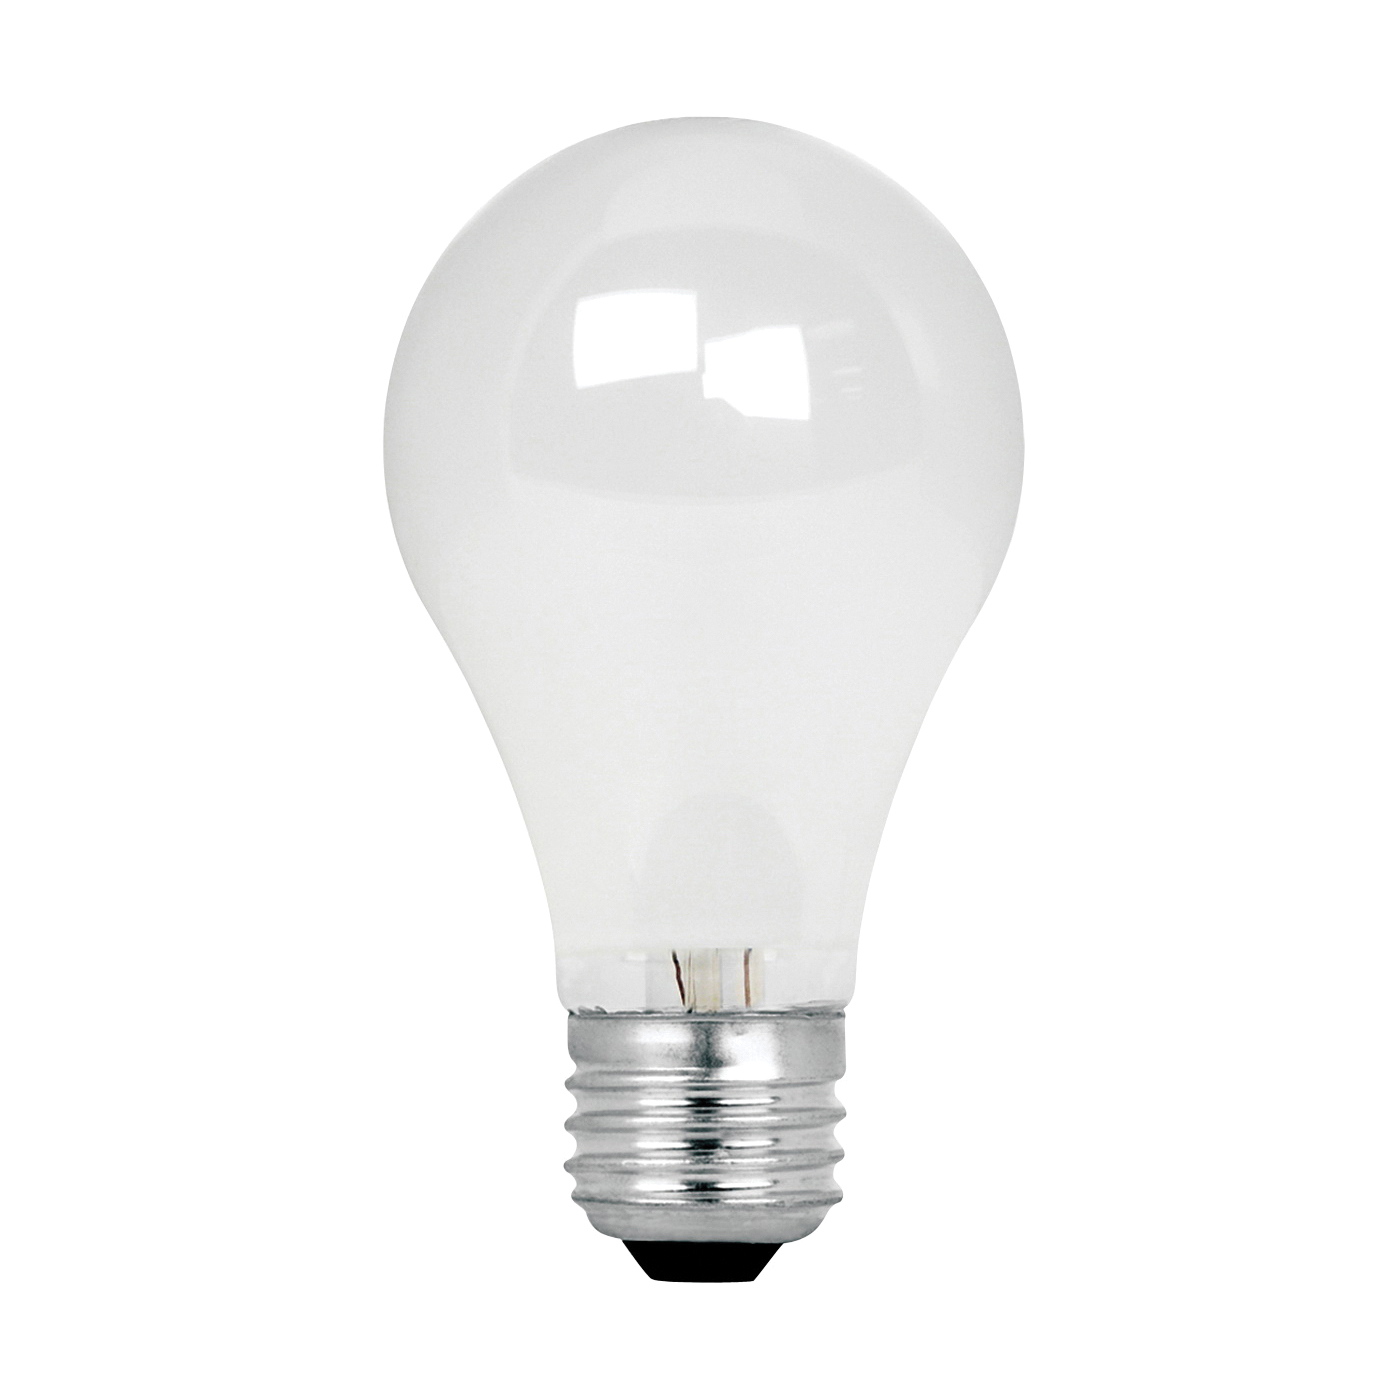 Q29A/W/4/RP Halogen Bulb, 29 W, Medium E26 Lamp Base, A19 Lamp, Soft White Light, 310 Lumens